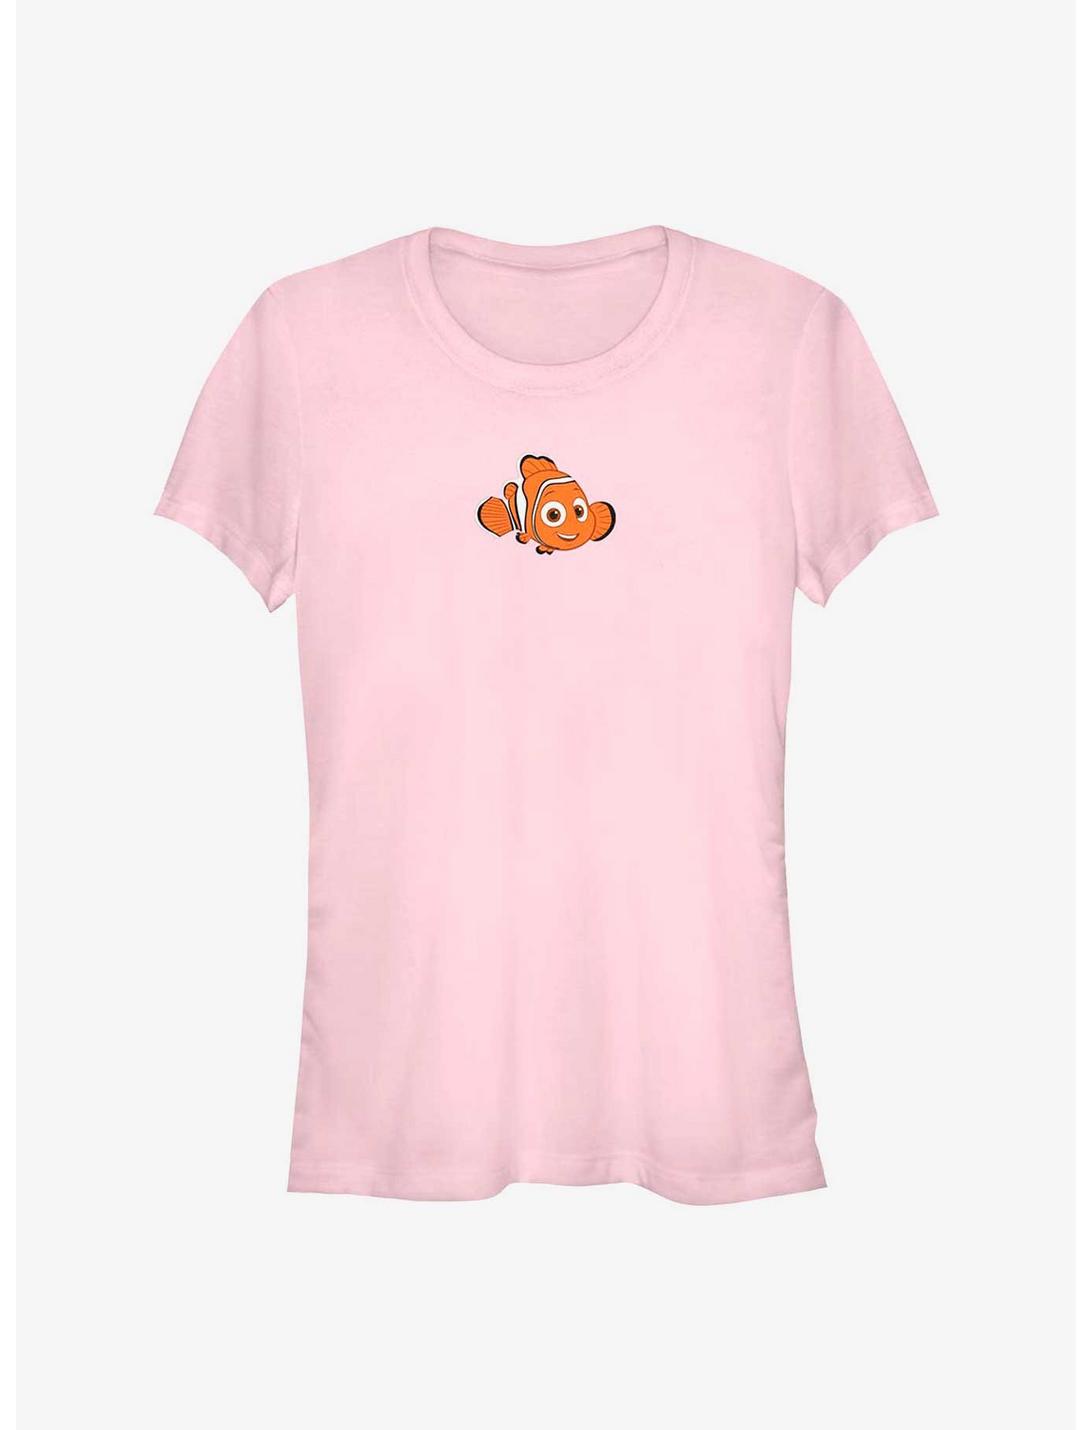 Disney Pixar Finding Nemo Solo Girls T-Shirt, LIGHT PINK, hi-res